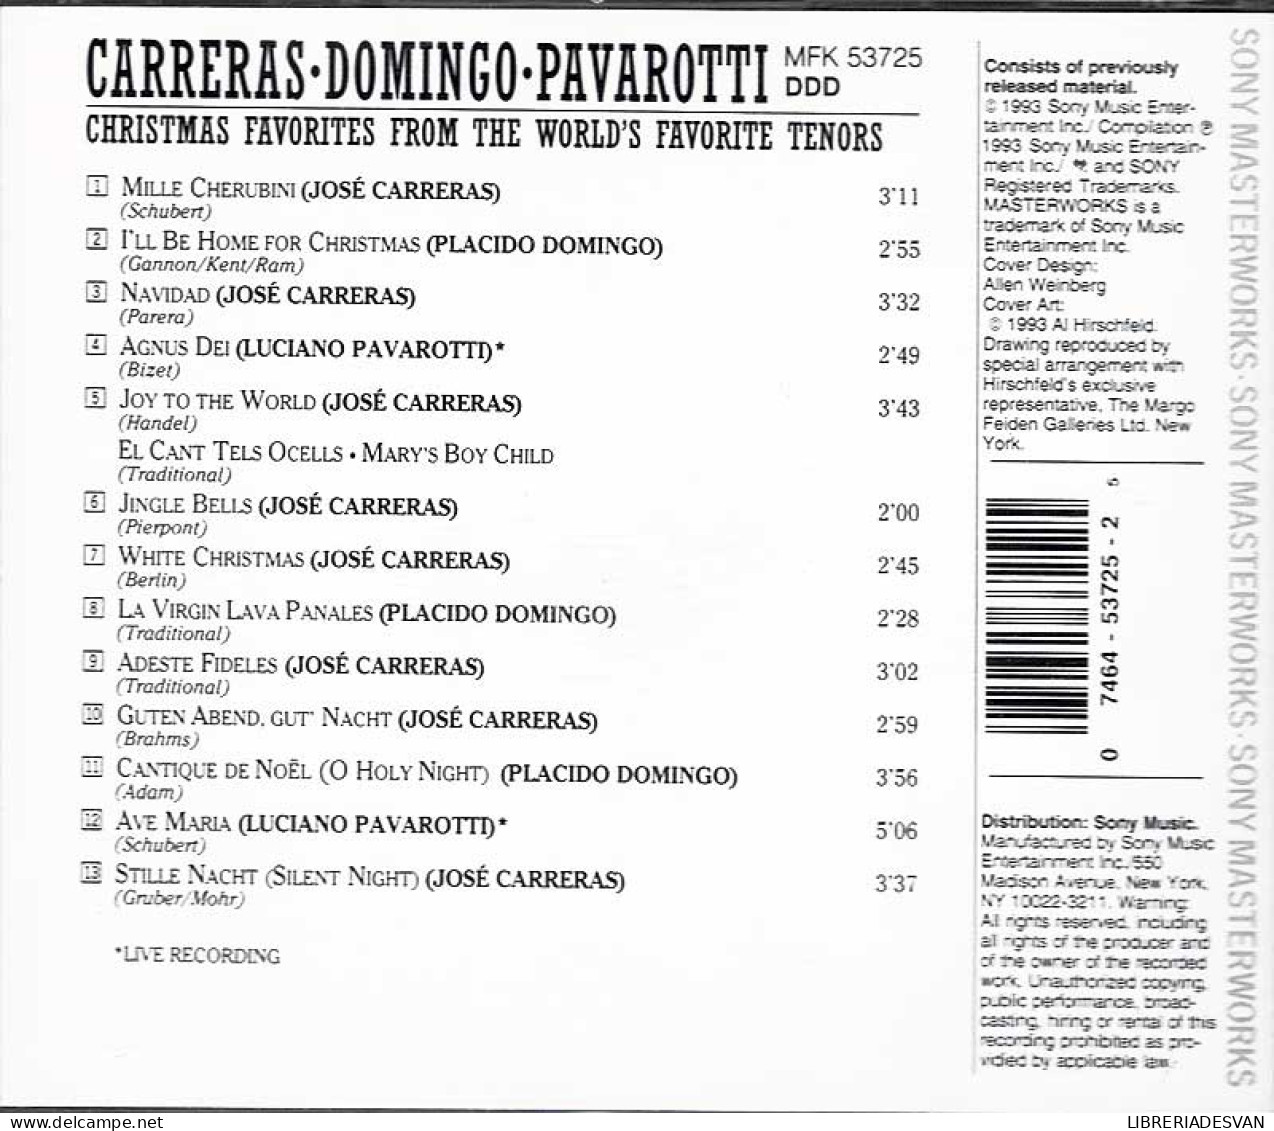 Carreras, Domingo, Pavarotti - Christmas Favorites From The World's Favorite Tenors. CD - Clásica